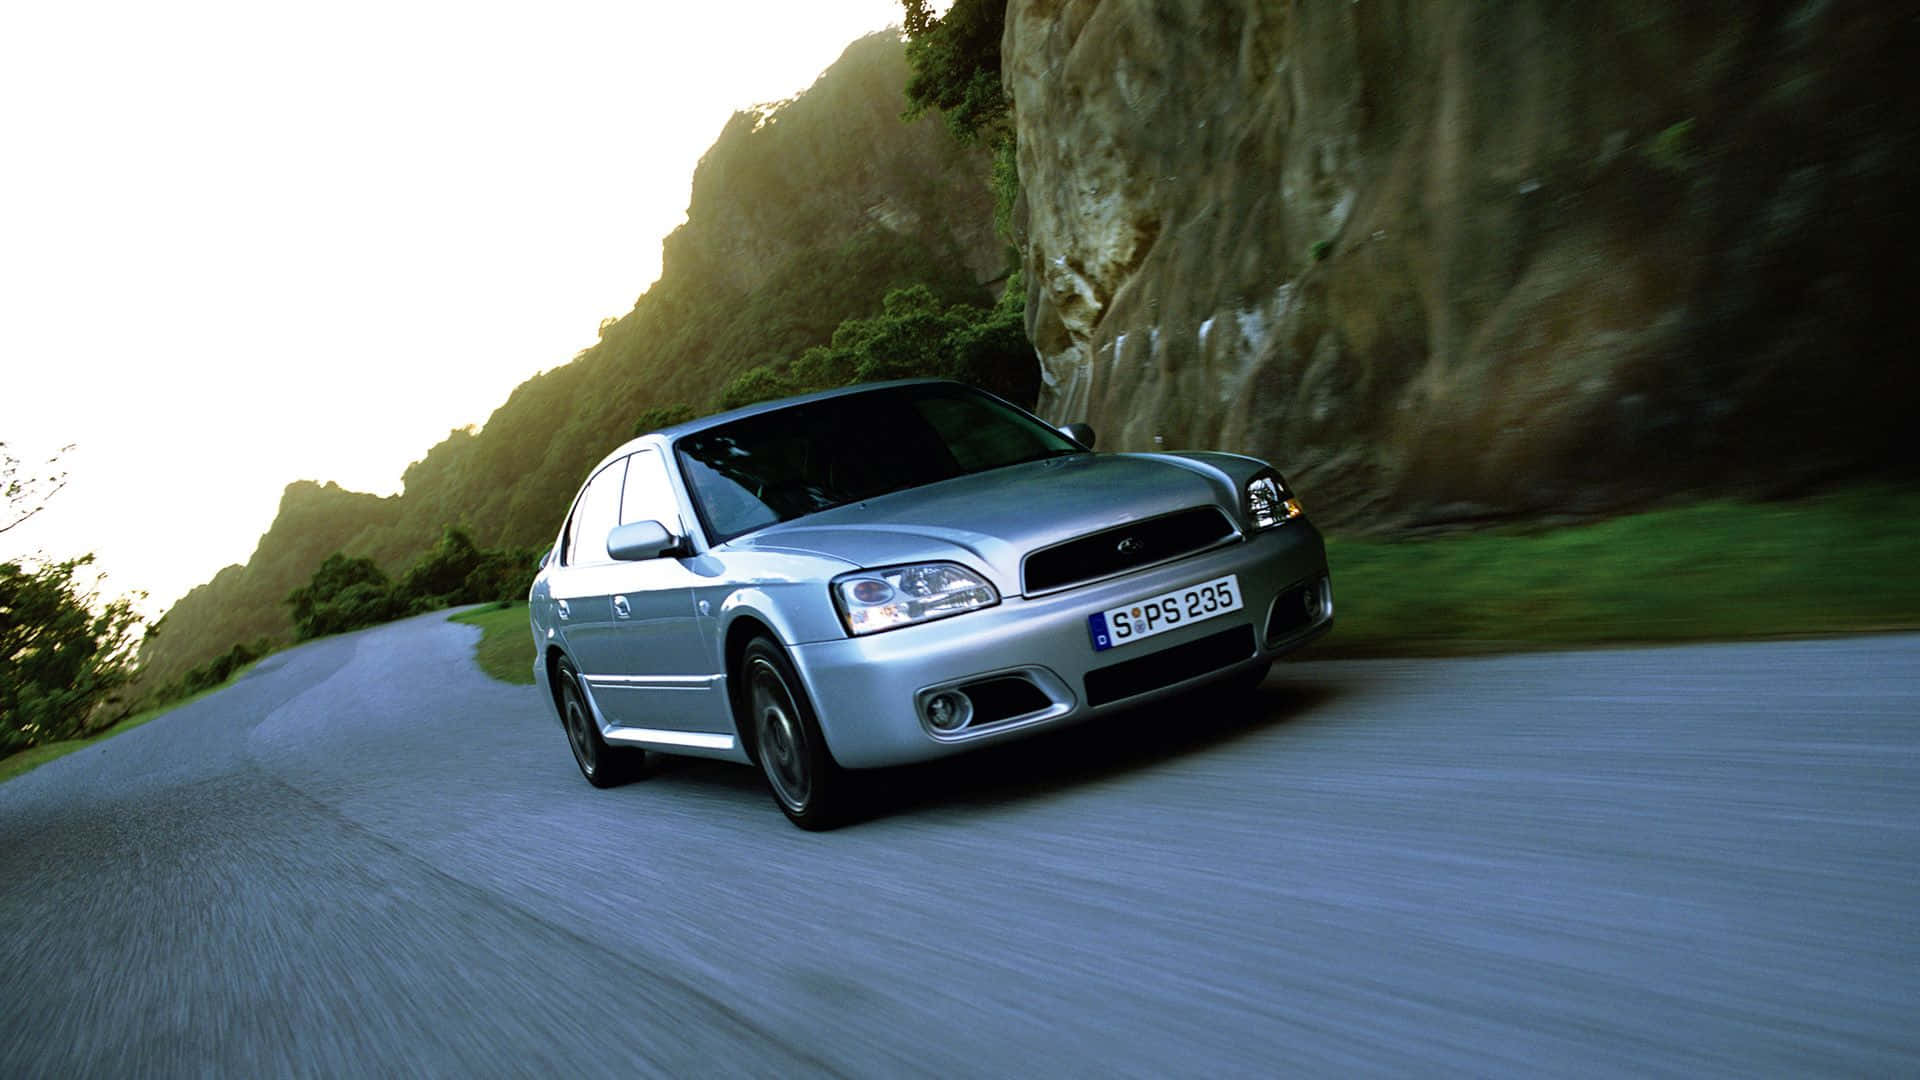 Caption: The Elegant Subaru Legacy Cruising The Highways Wallpaper